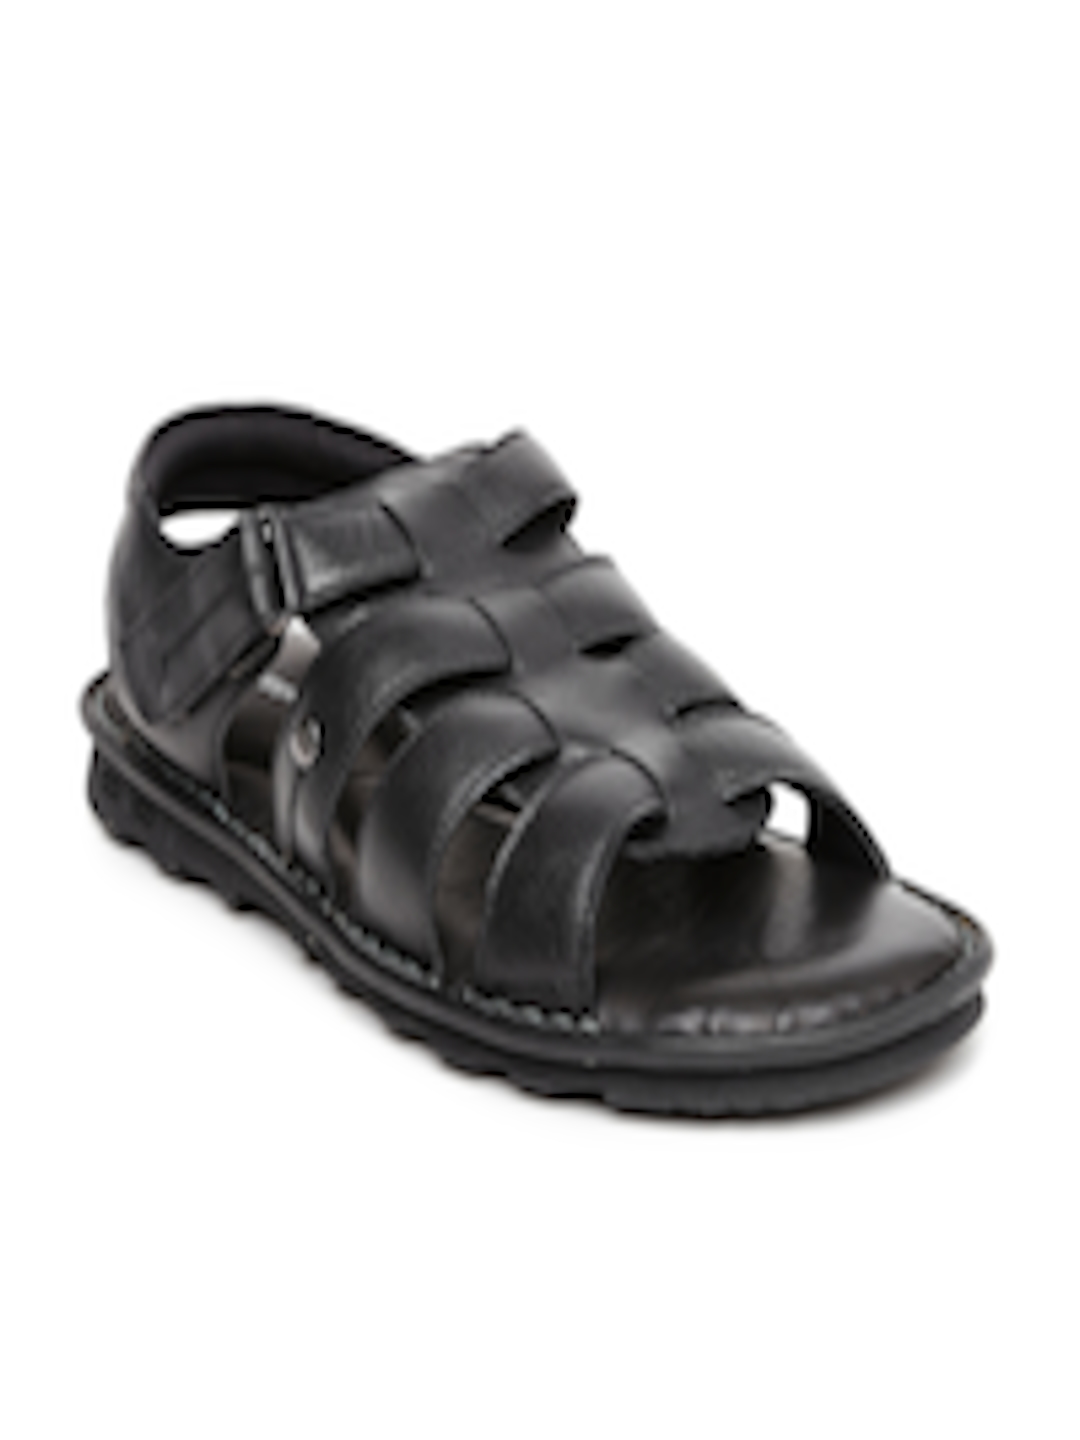 Buy Hush Puppies Men Black Rebound Sandals - Sandals for Men 1411603 ...